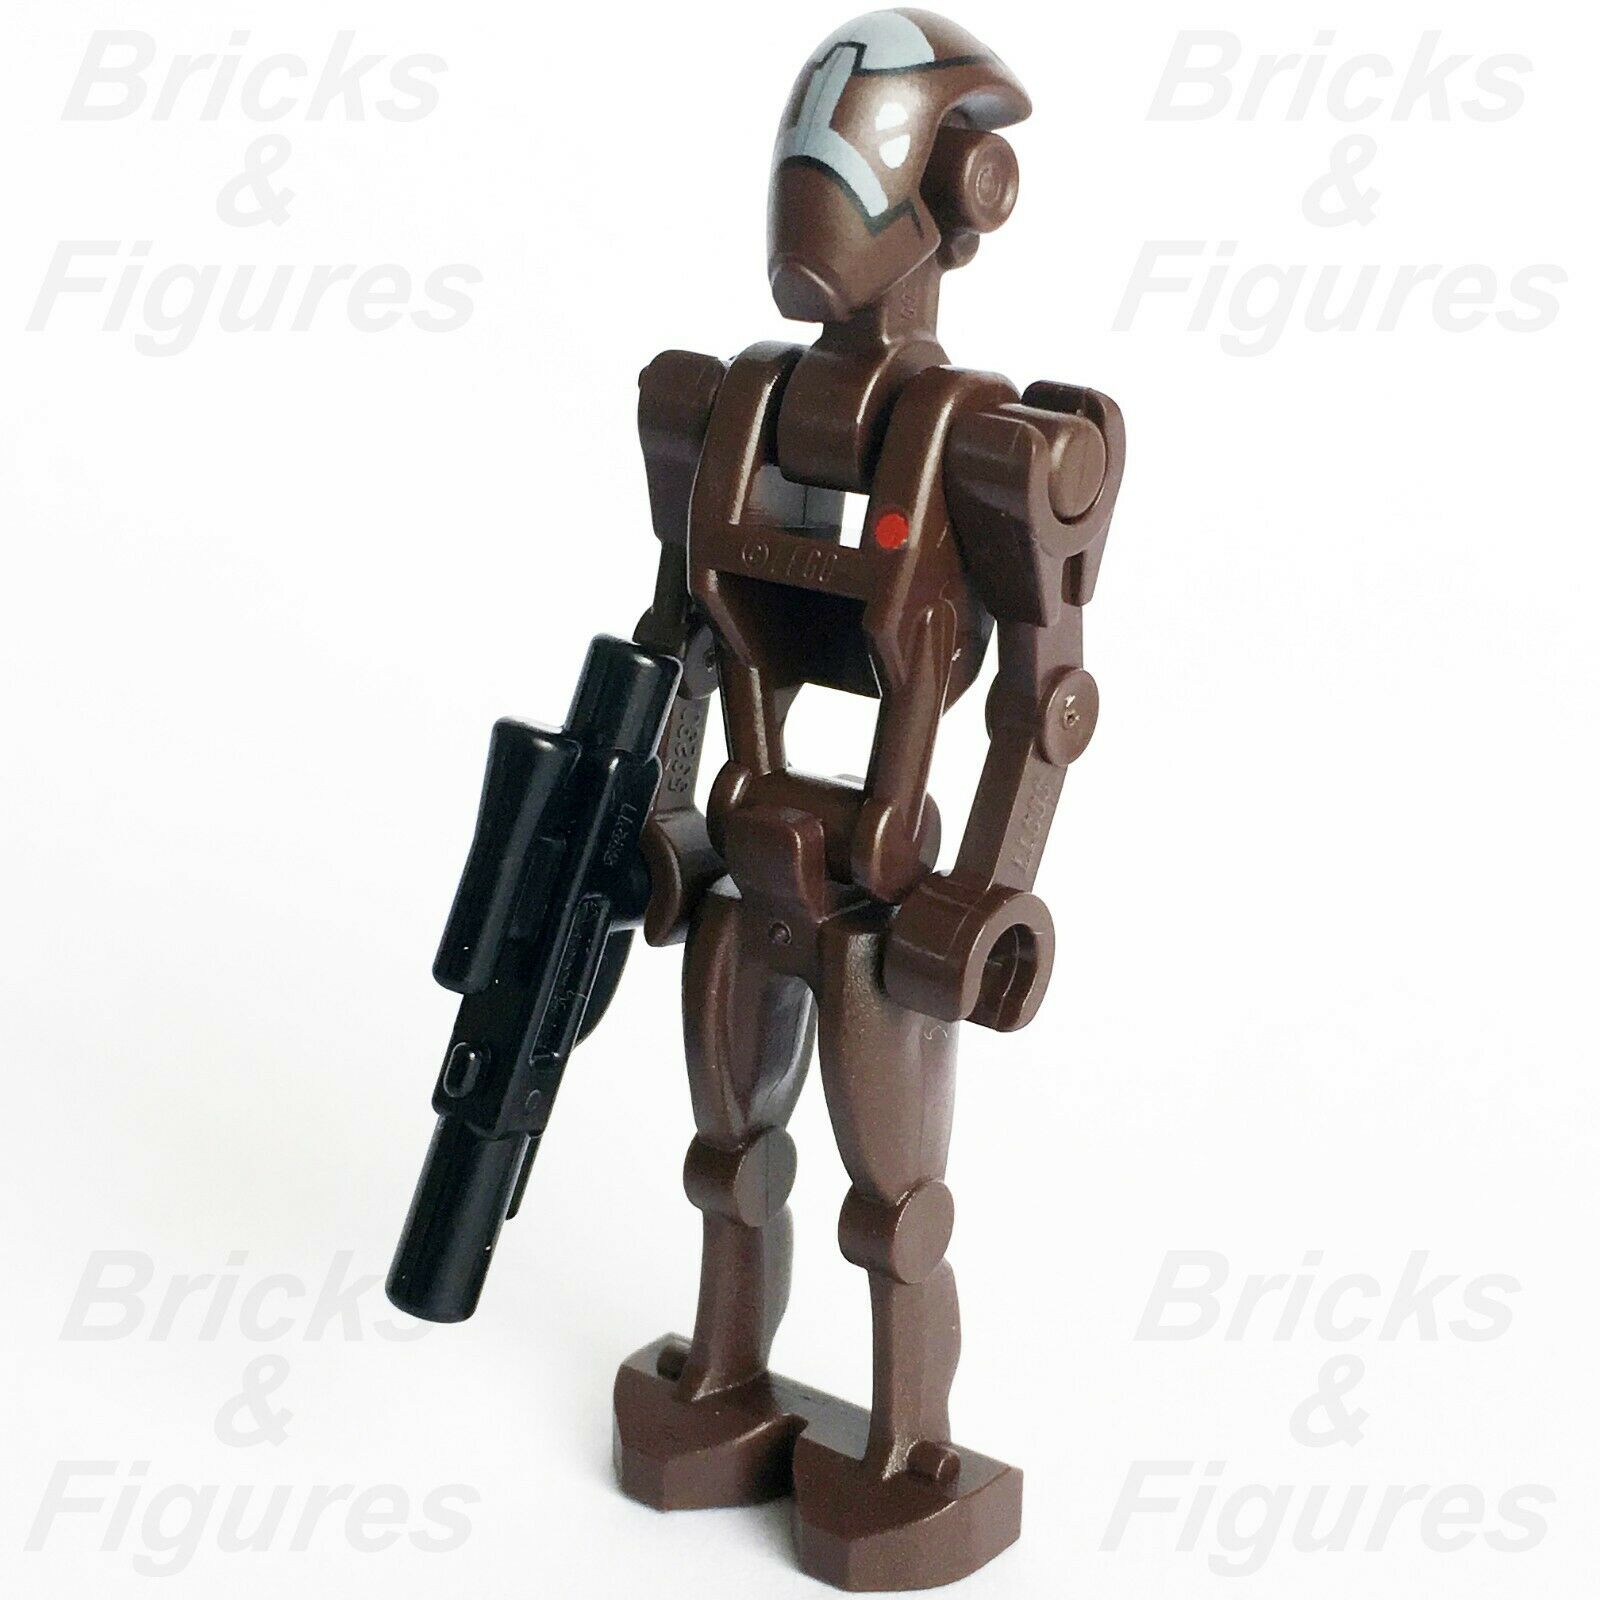 New Star Wars LEGO Elite Commando Droid Captain Minifigure from set 75002 - Bricks & Figures